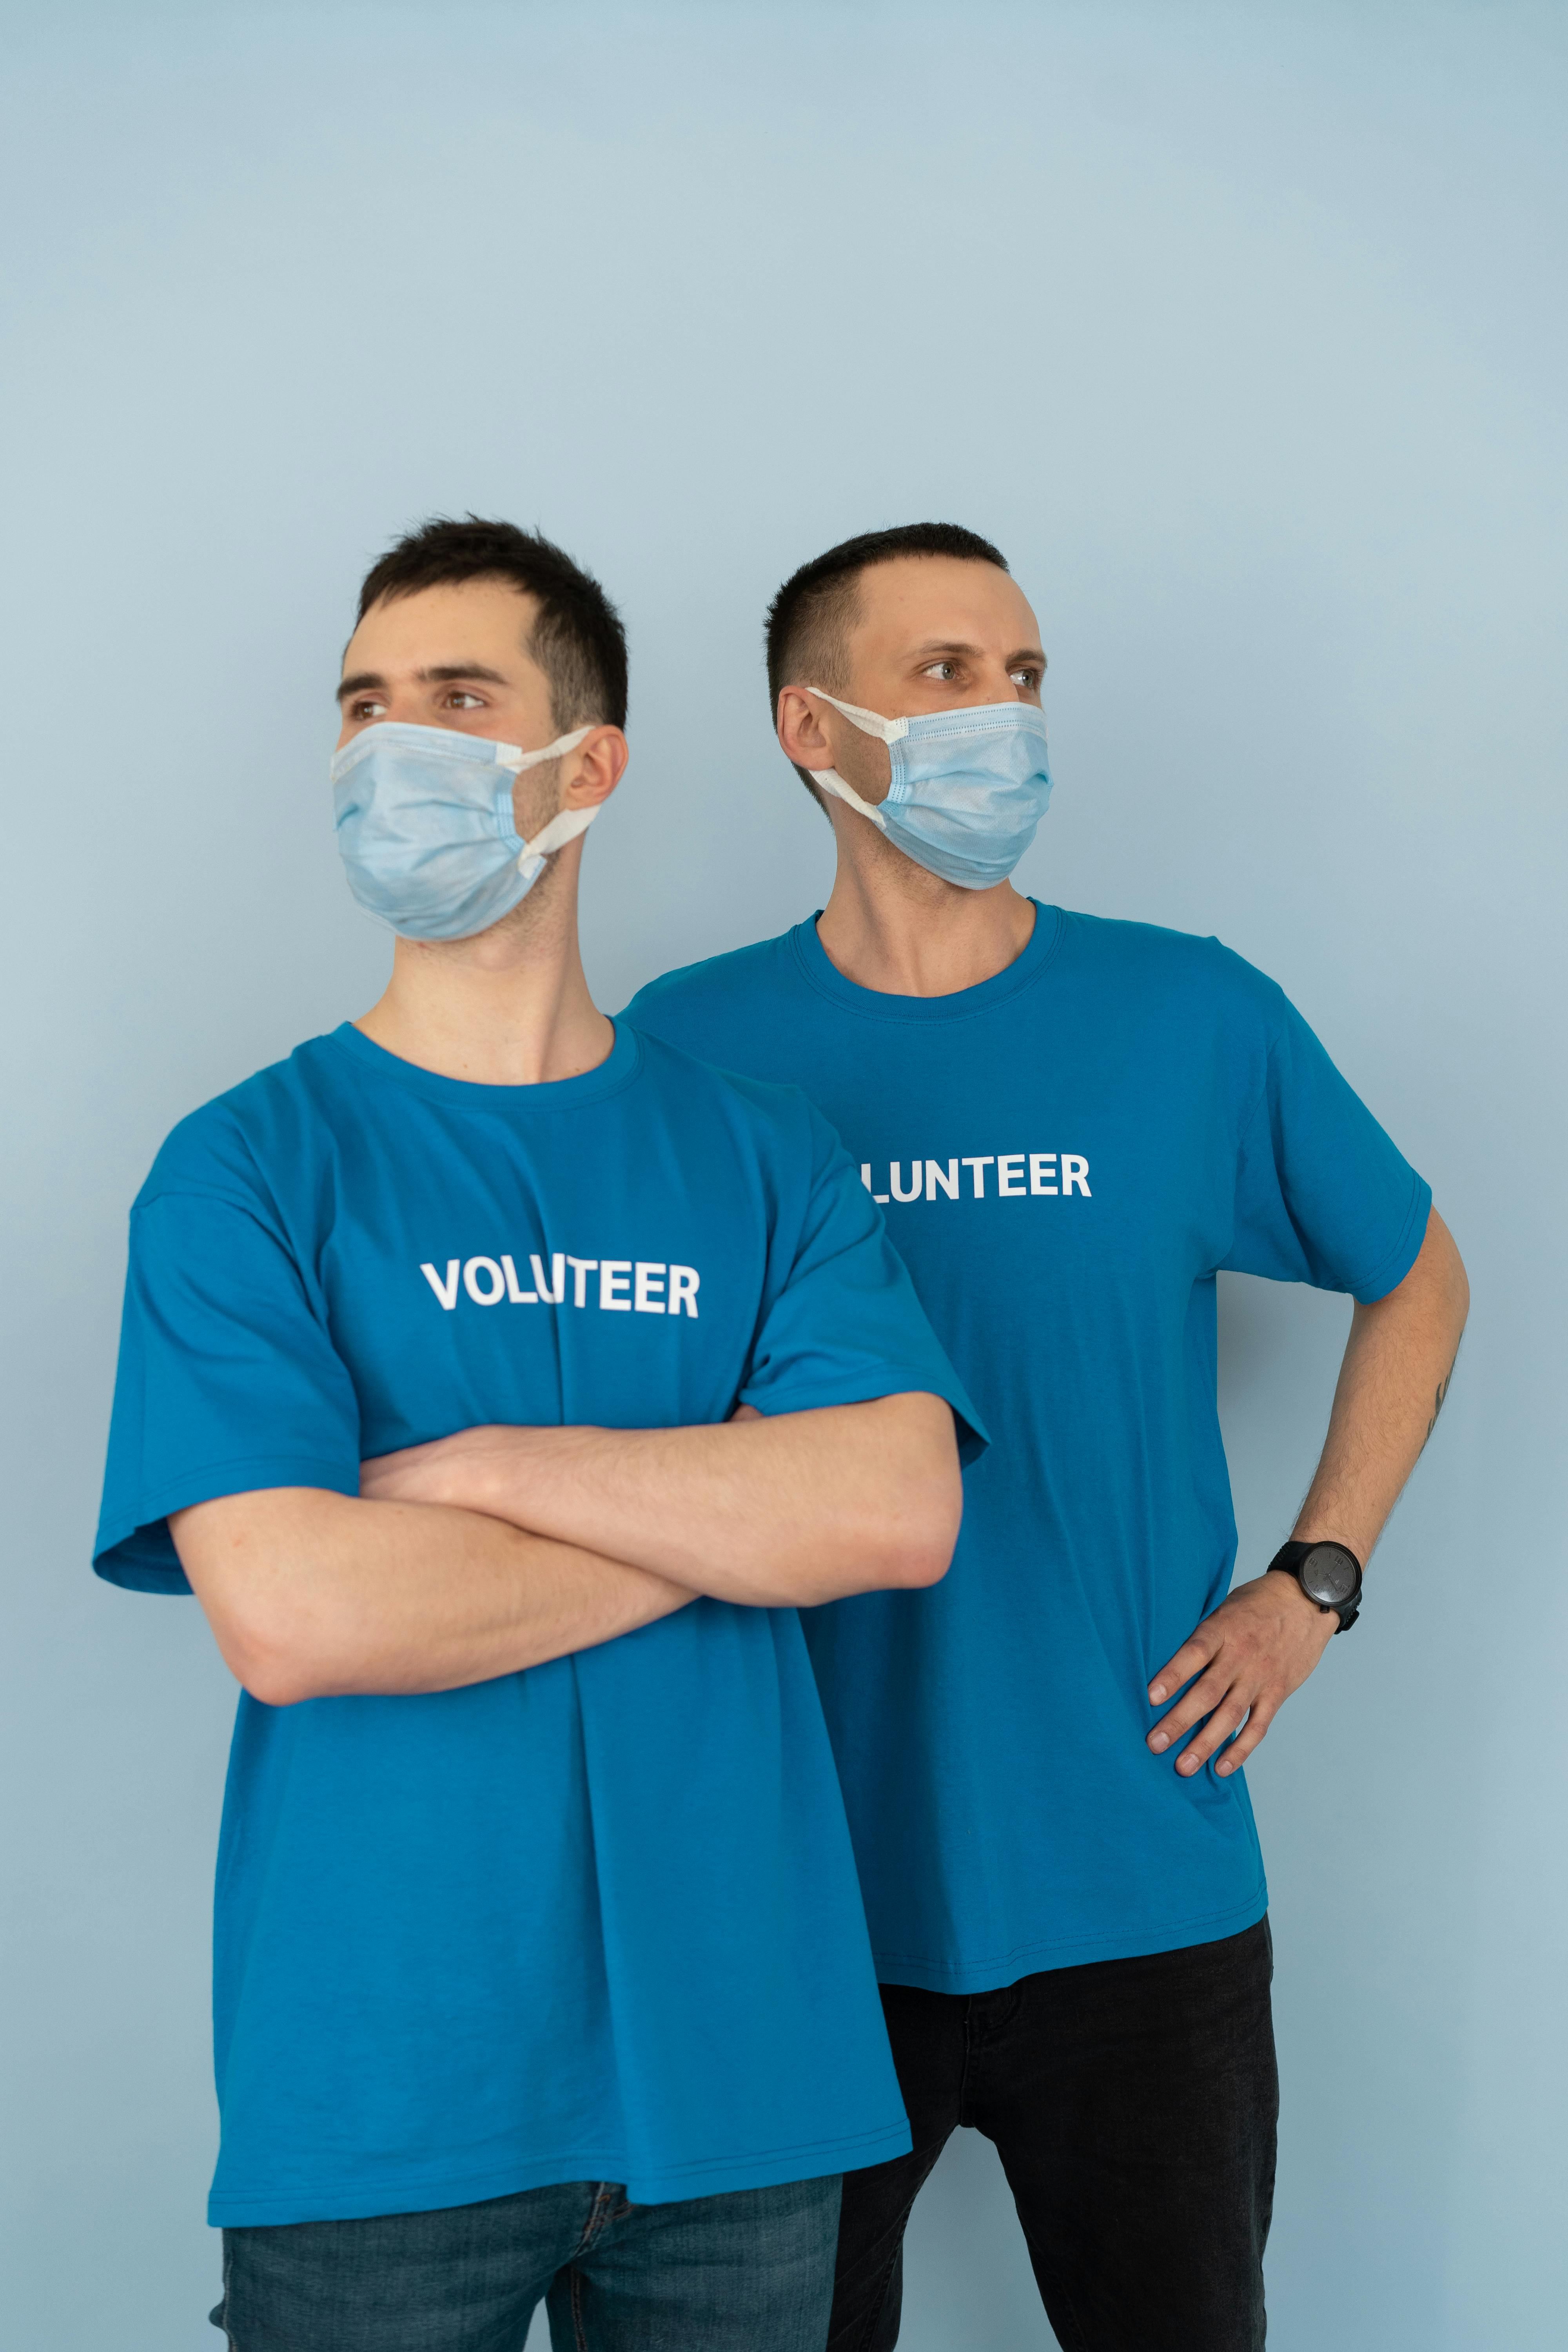 photo of men with face masks wearing volunteer shirts